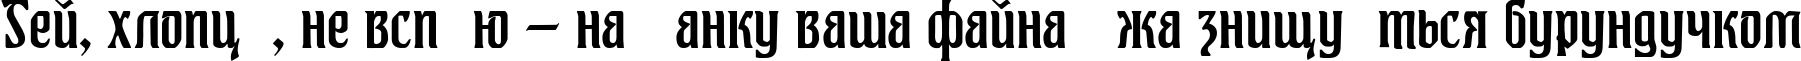 Пример написания шрифтом Augusta Two текста на украинском